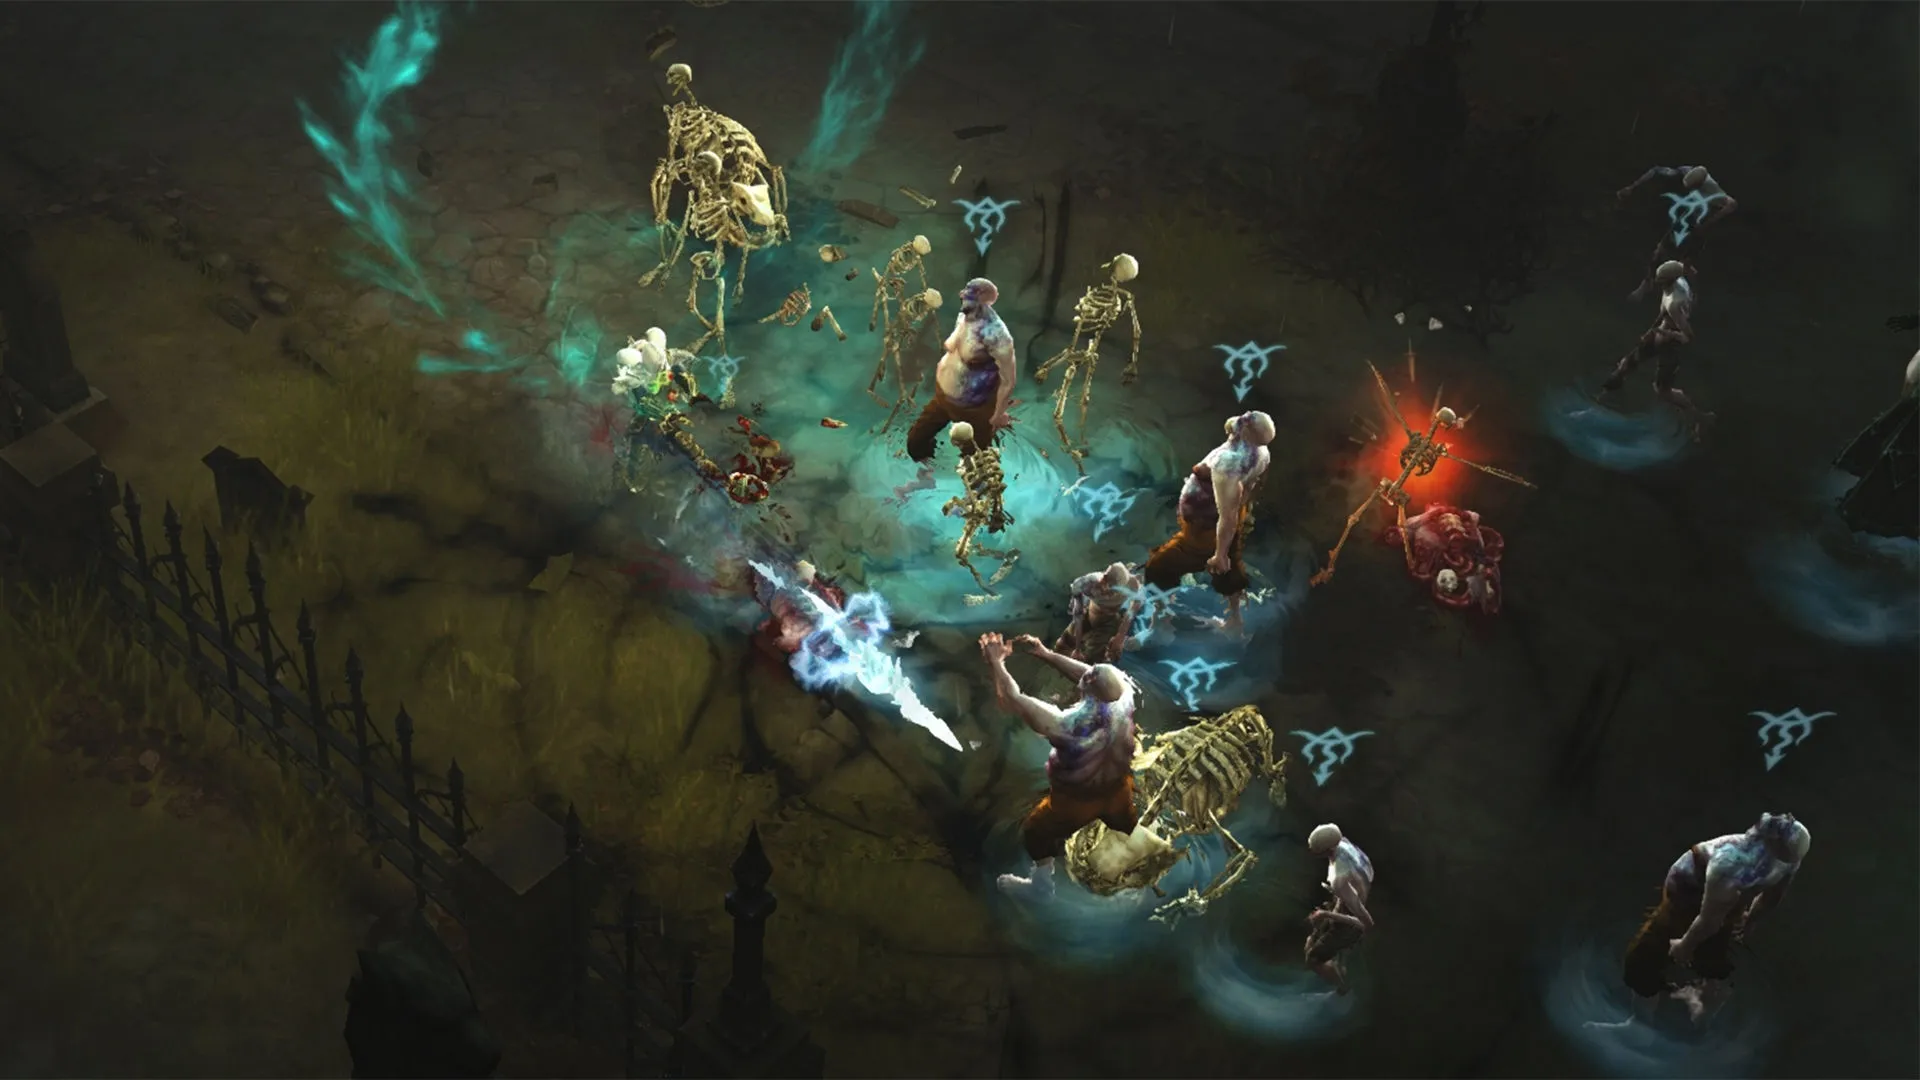 Blizzard has faithfully recreated the Necromancer Diablo III, yet, is it enough? – Destructoid